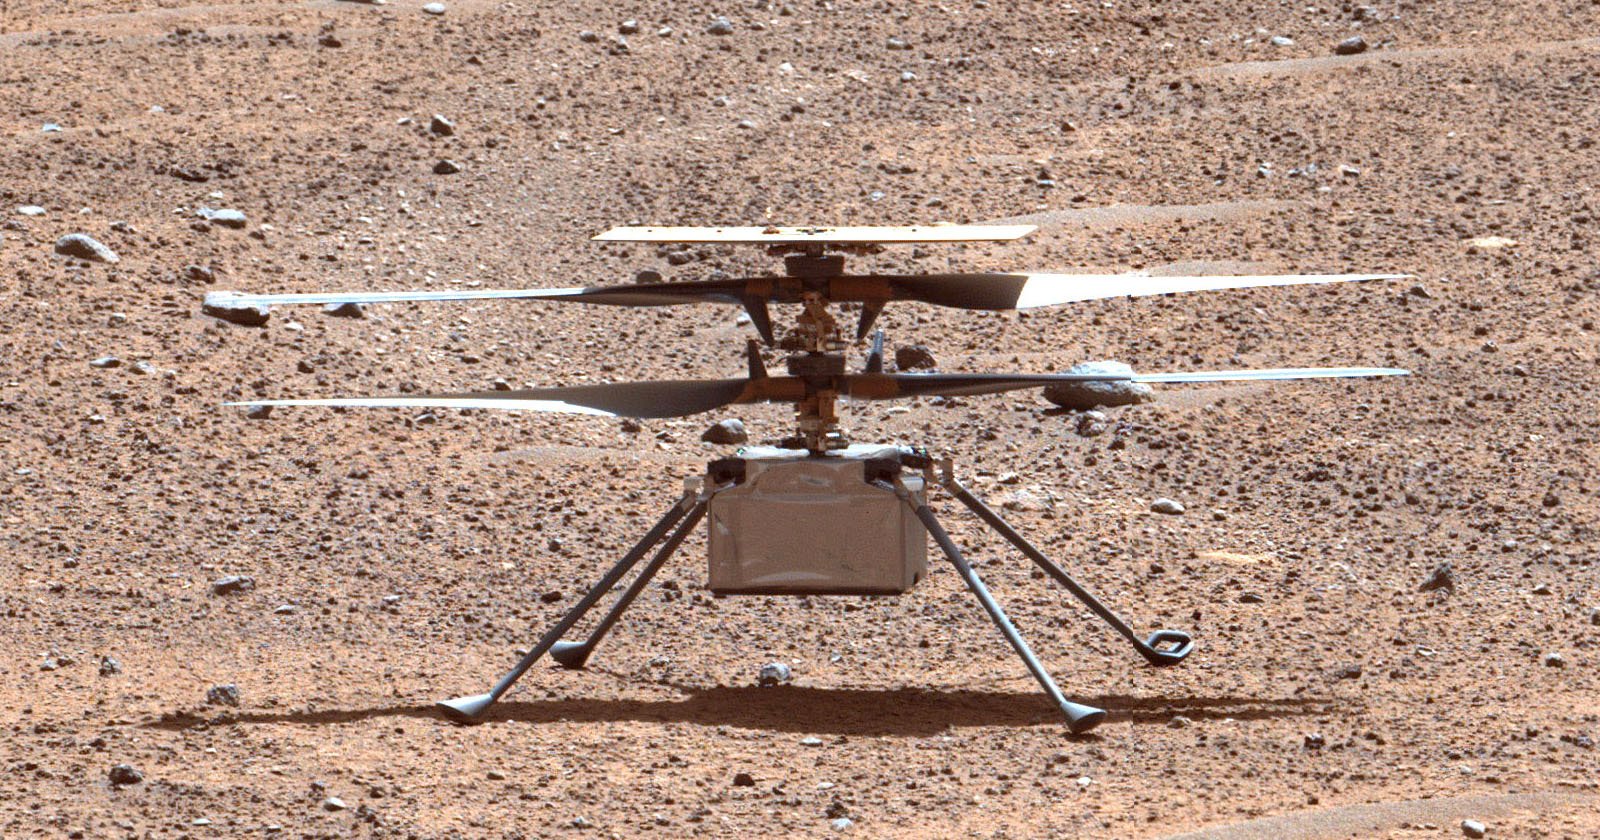 After 3 Years, NASAs Mars Camera Drone Has Made Its Final Flight